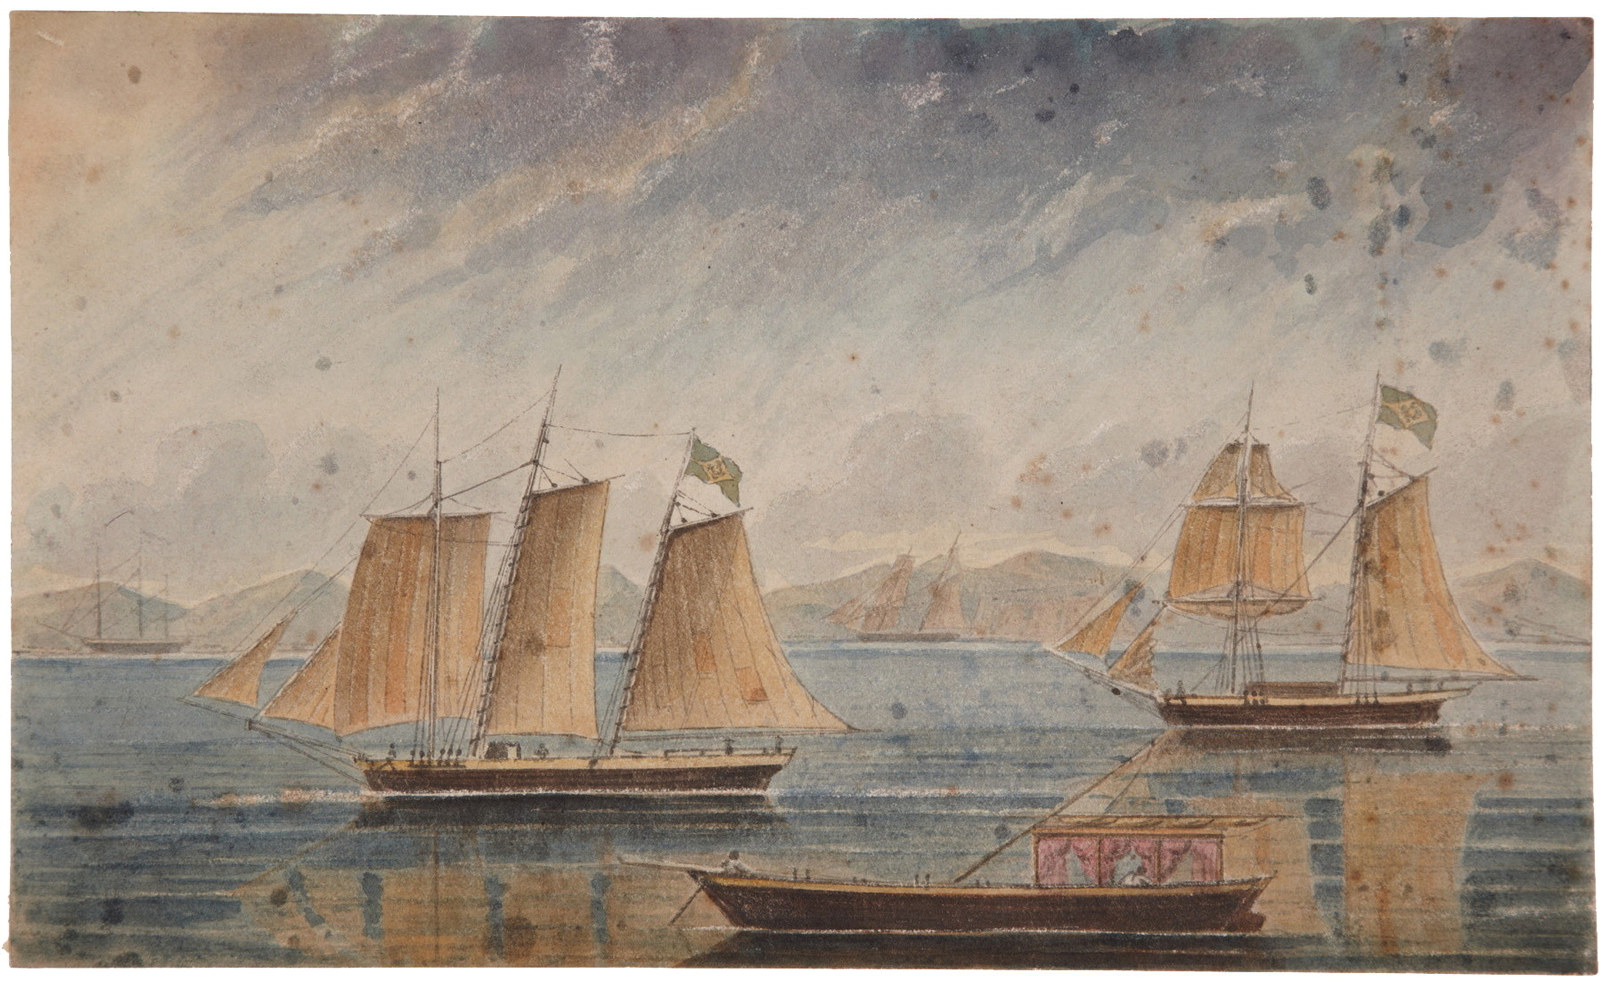 Brazilian coasting vessels, Edmund Pink, c1824